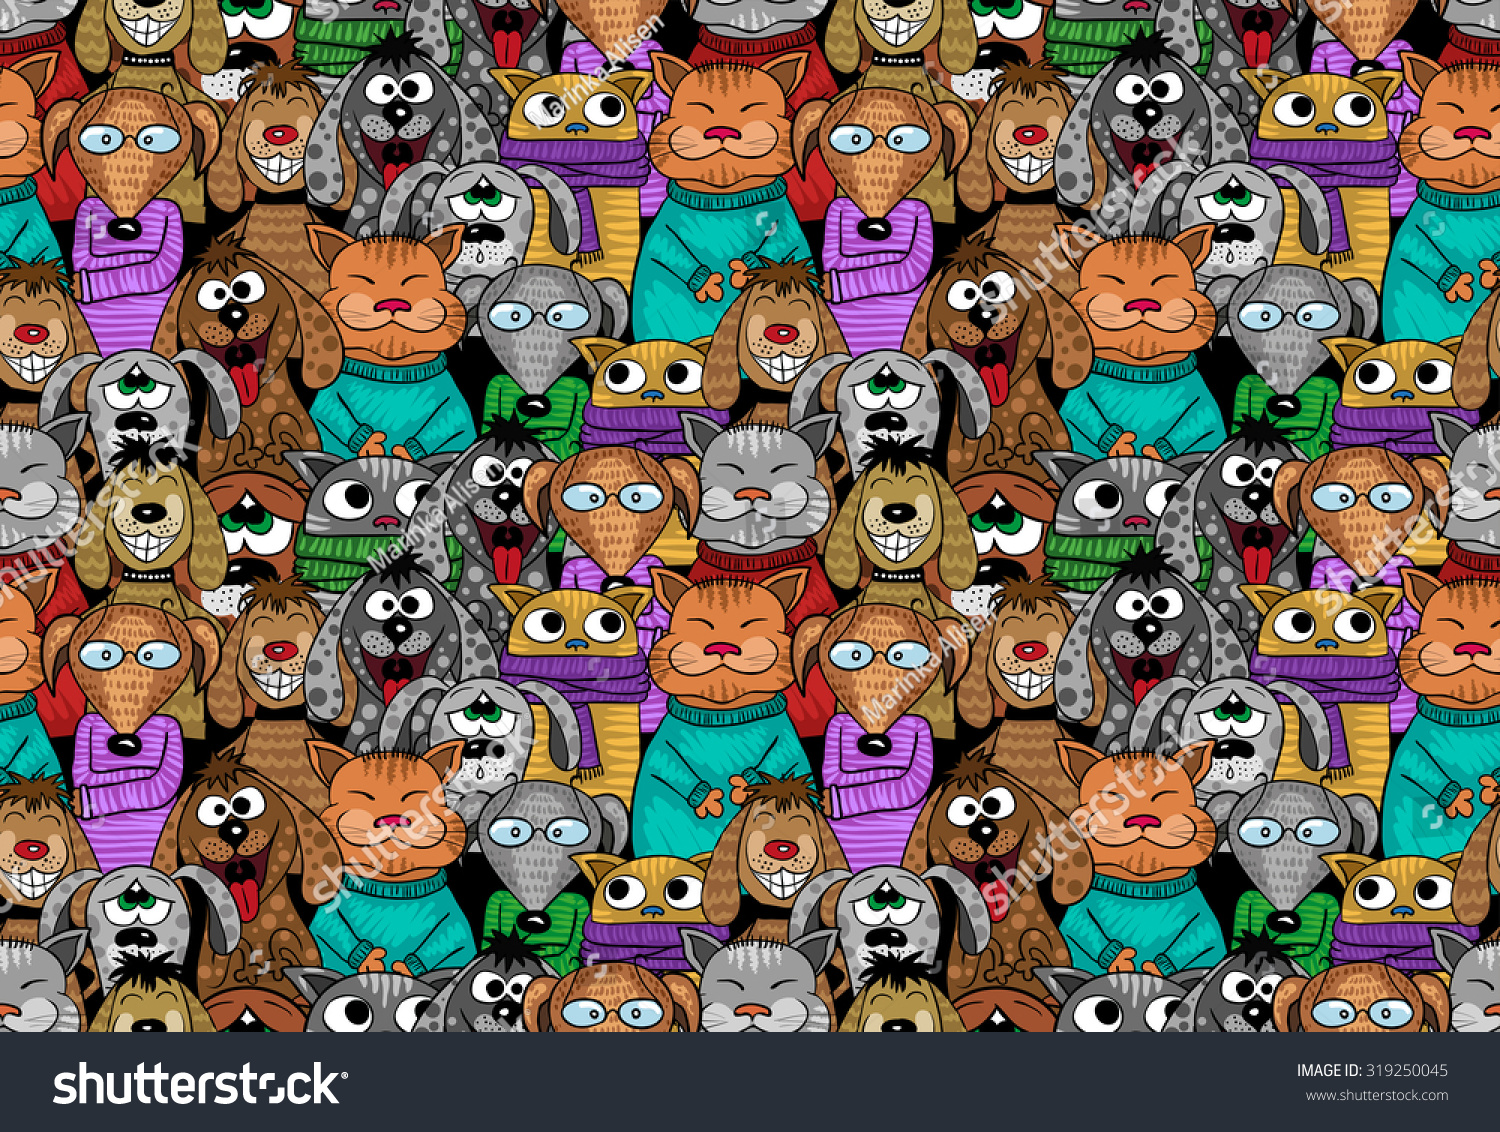 Cats Dogs Cartoon Seamless Pattern Positive Stock Vector 319250045 - Shutterstock